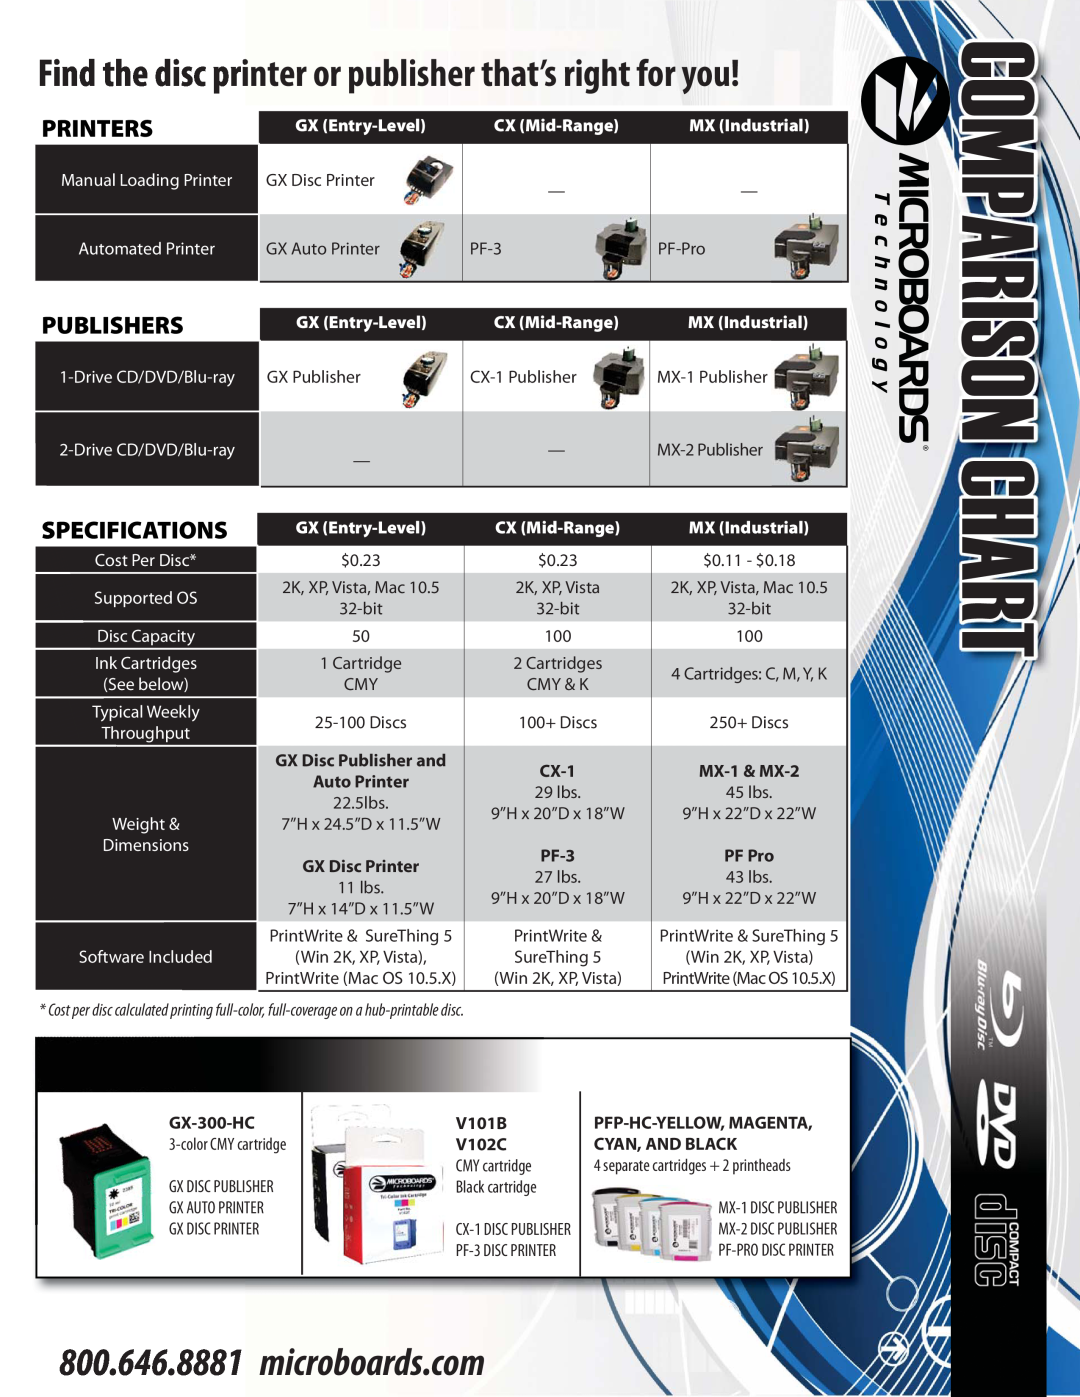 MicroBoards Technology GX2-1000 Chart, GX Disc Publisher and Auto Printer, GX Disc Printer, CX-1, PF-3, MX-1 & MX-2 